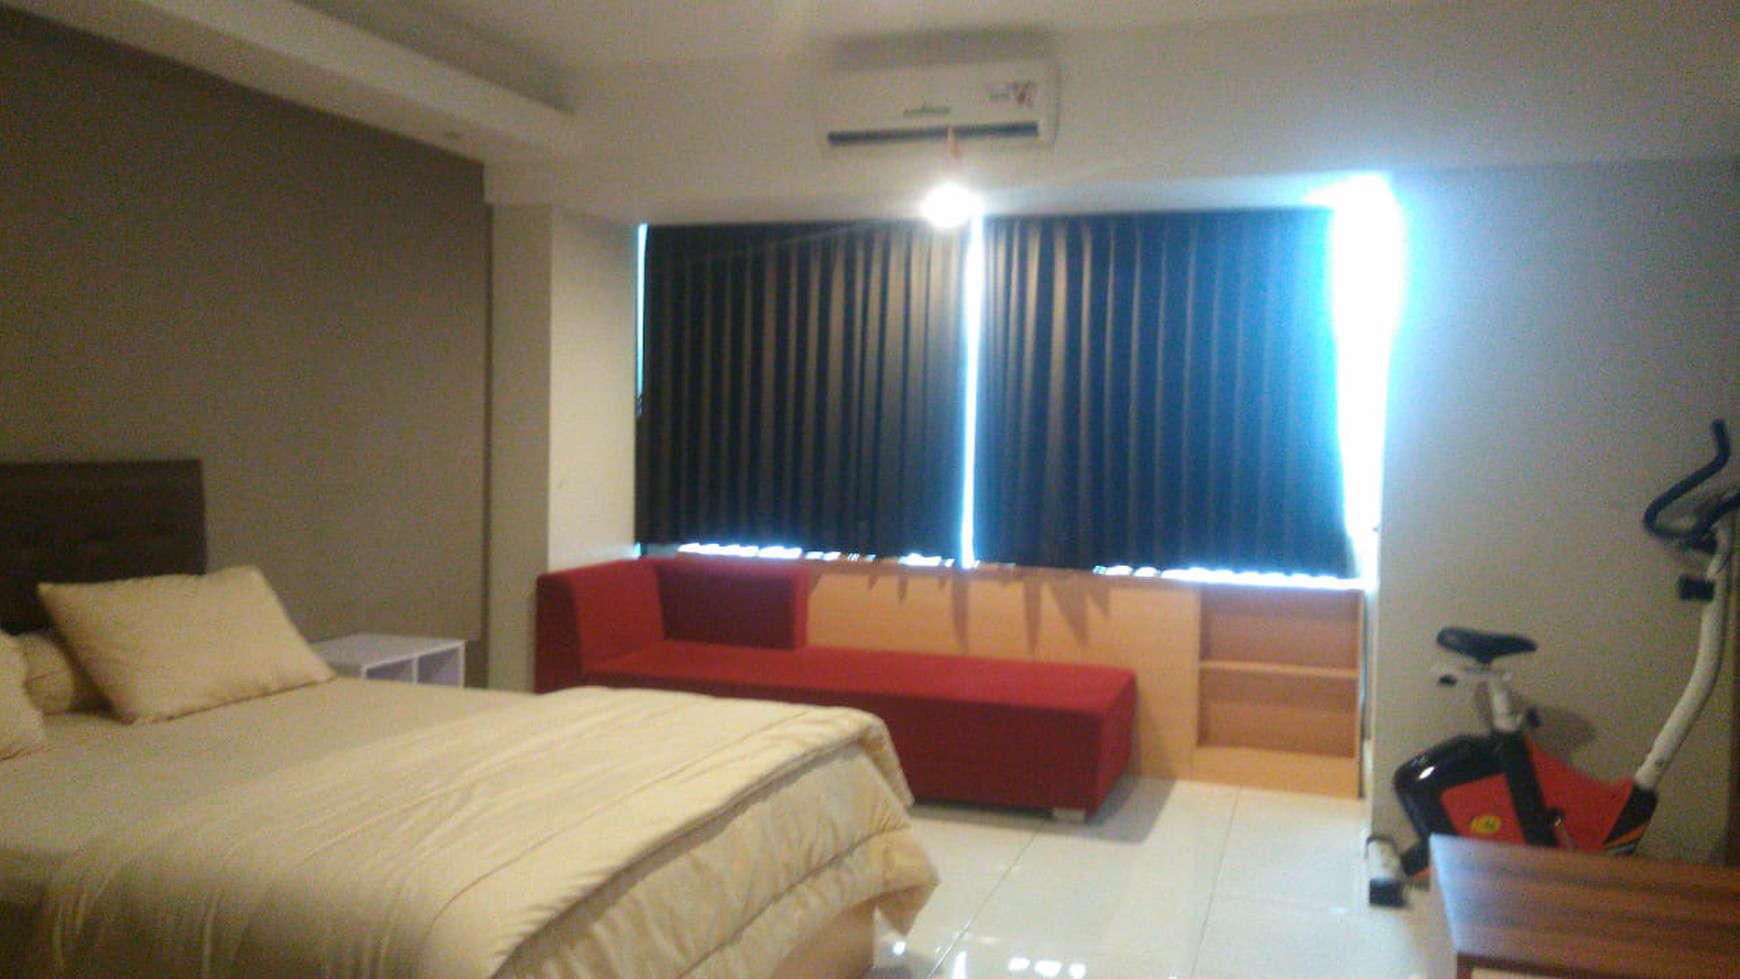 Jual Apartemen dekat kampus UGM dekat hotel hyatt jl. palagan yogyakarta.